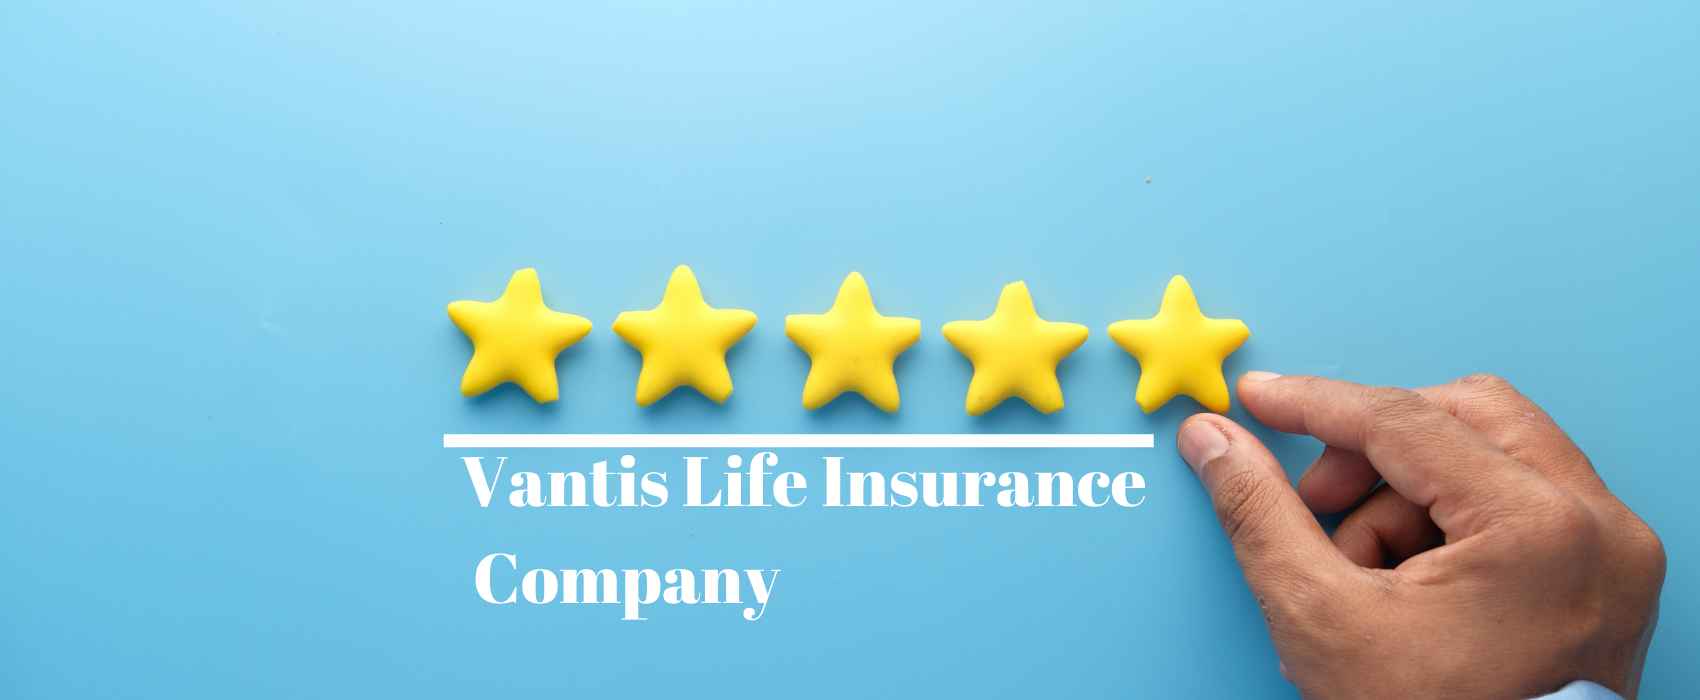 vantis life insurance reviews